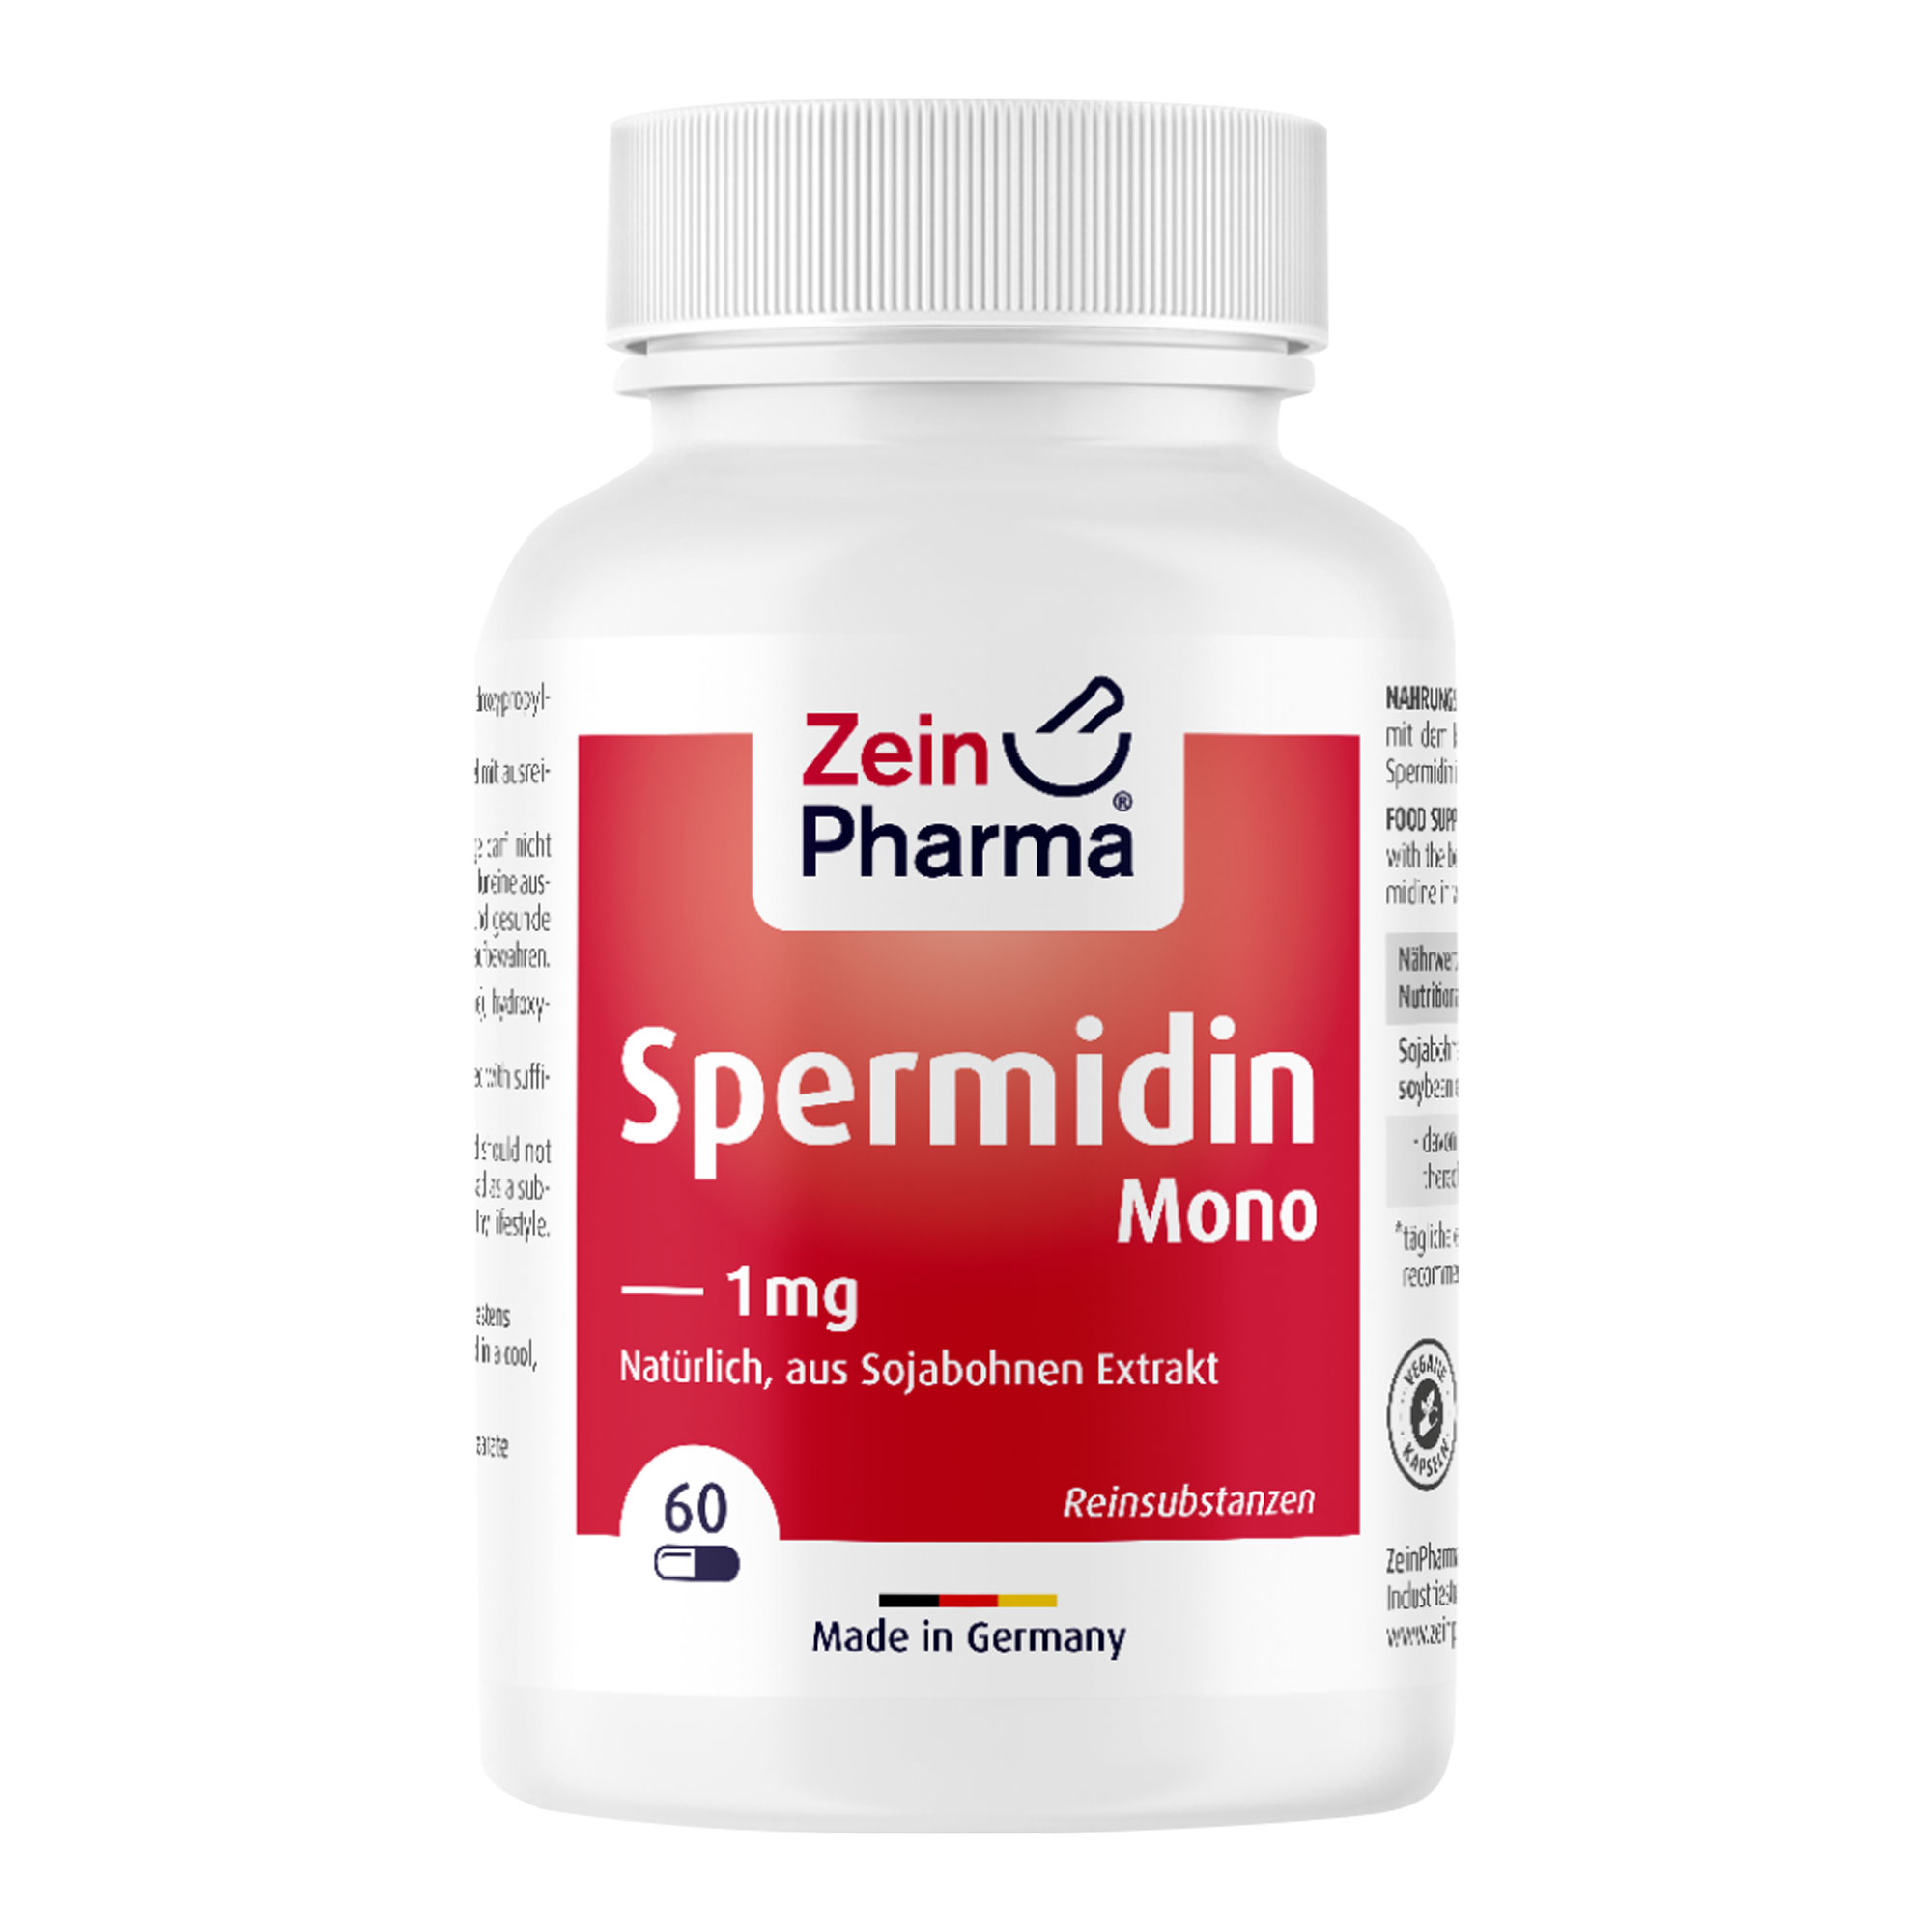 Nahrungsergänzungsmittel mit dem körpereigenen, biogenen Polyamin Spermidin.